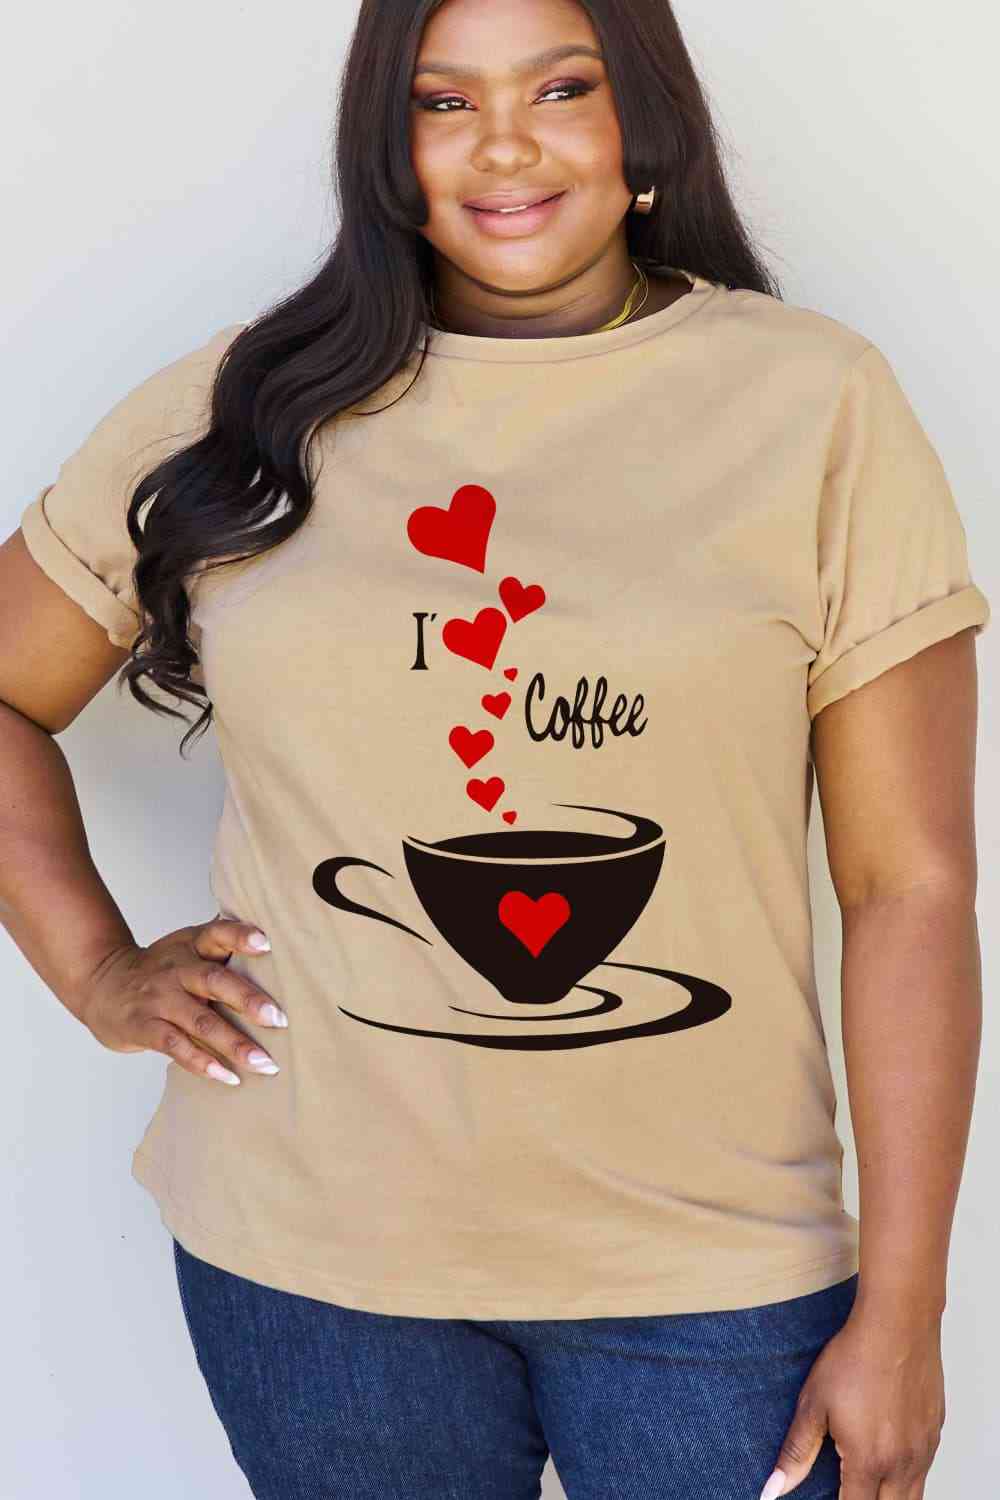 I LOVE COFFEE Graphic Cotton Tee - T-Shirts - Shirts & Tops - 8 - 2024